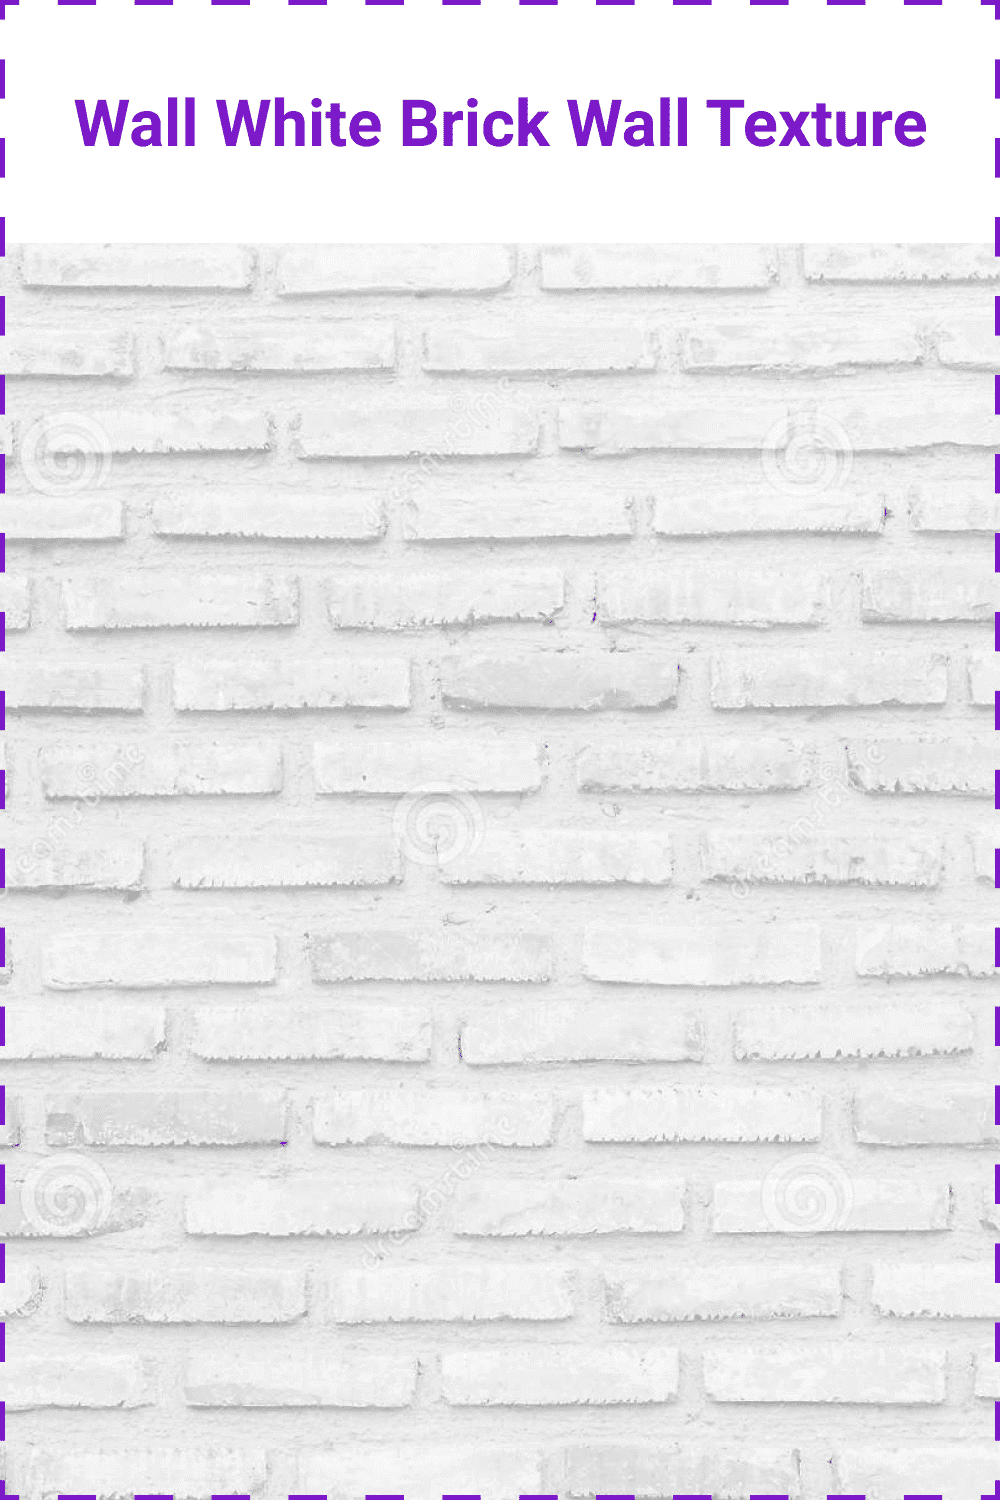 Wall white brick wall texture.